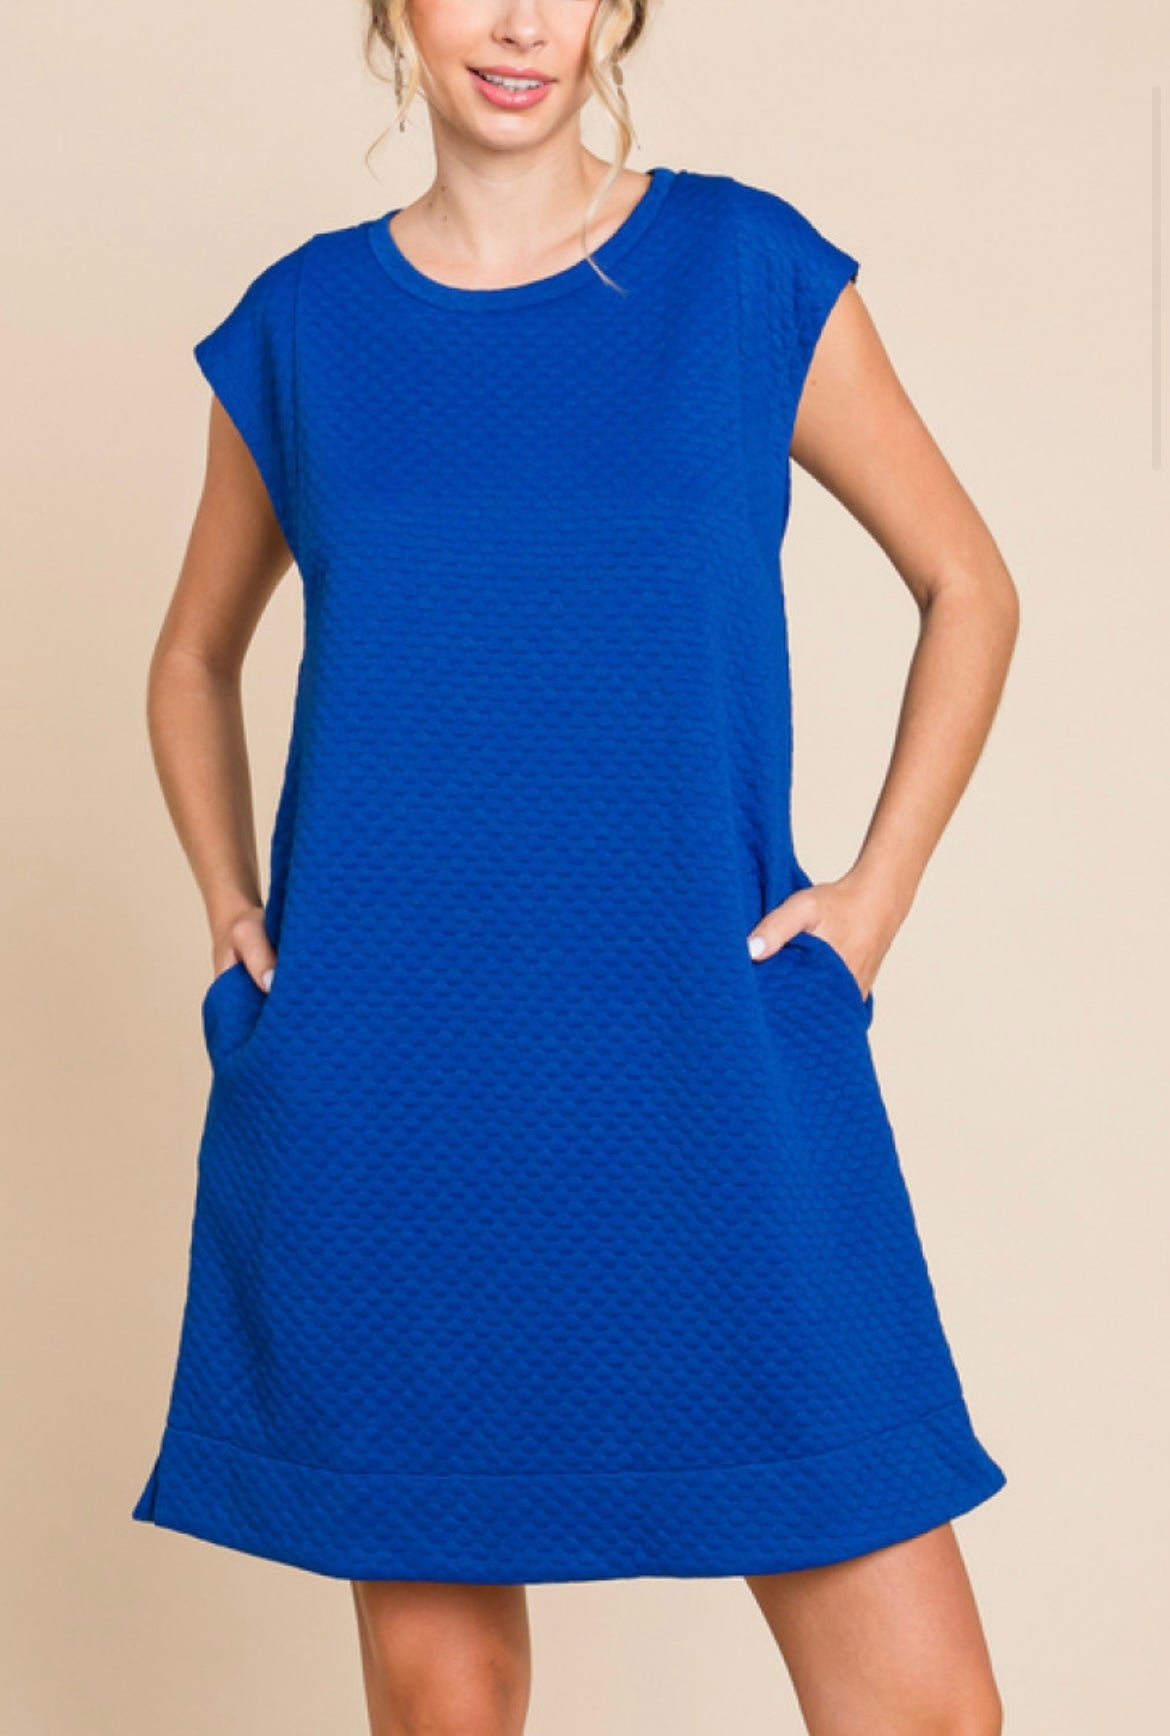 Textured Sleeveless Dress (3 colors)